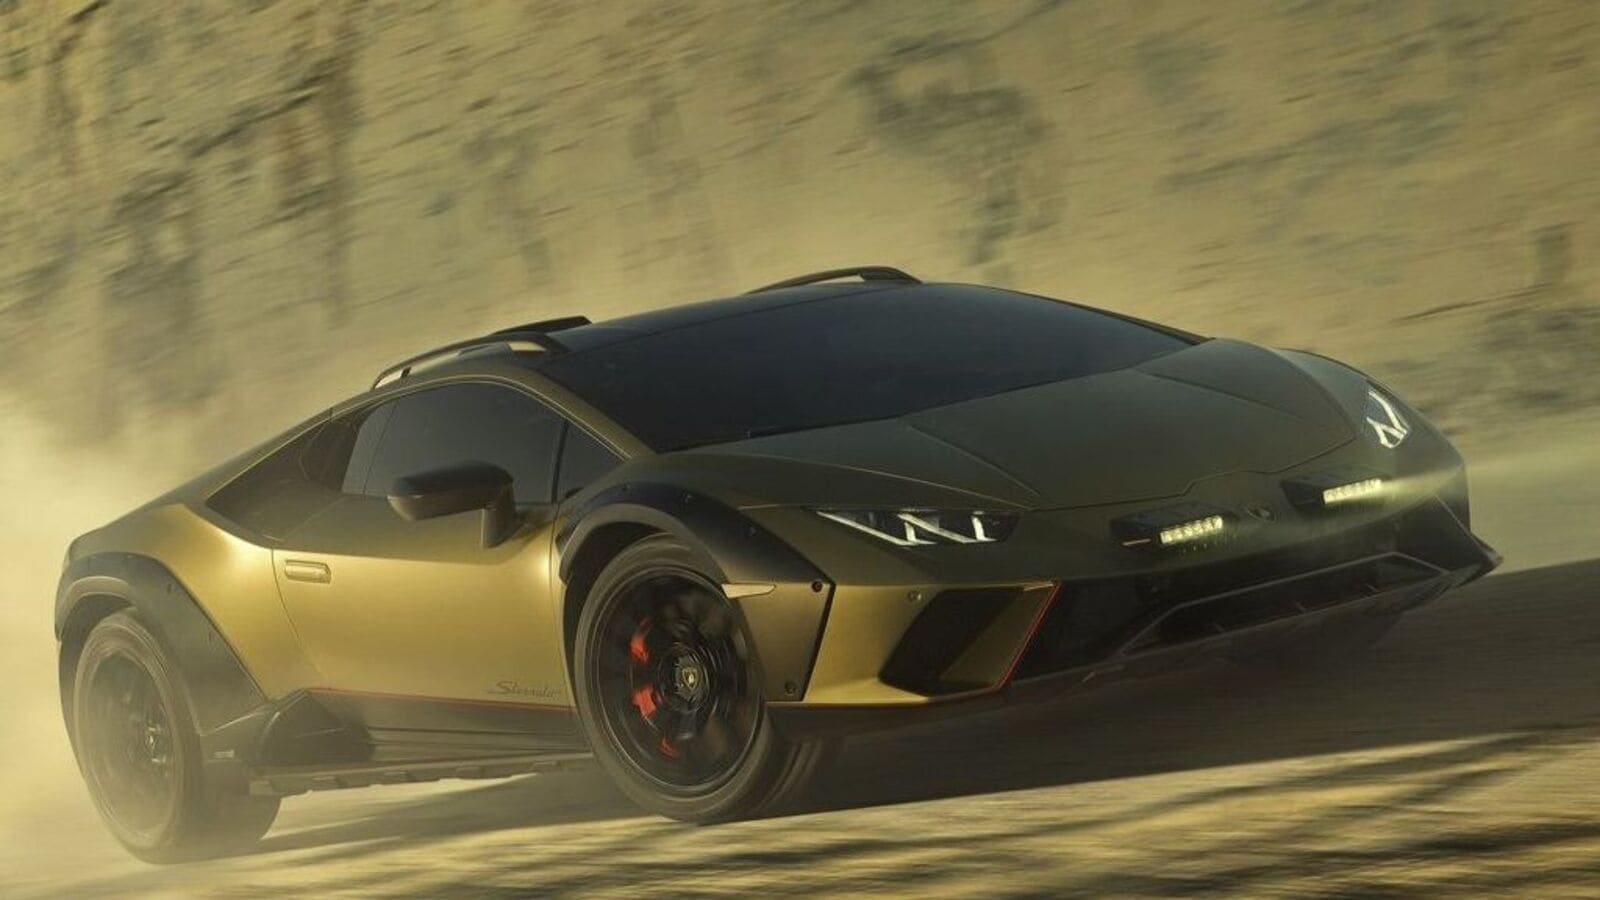 Lamborghini unveils first hybrid—with a 6 mile range